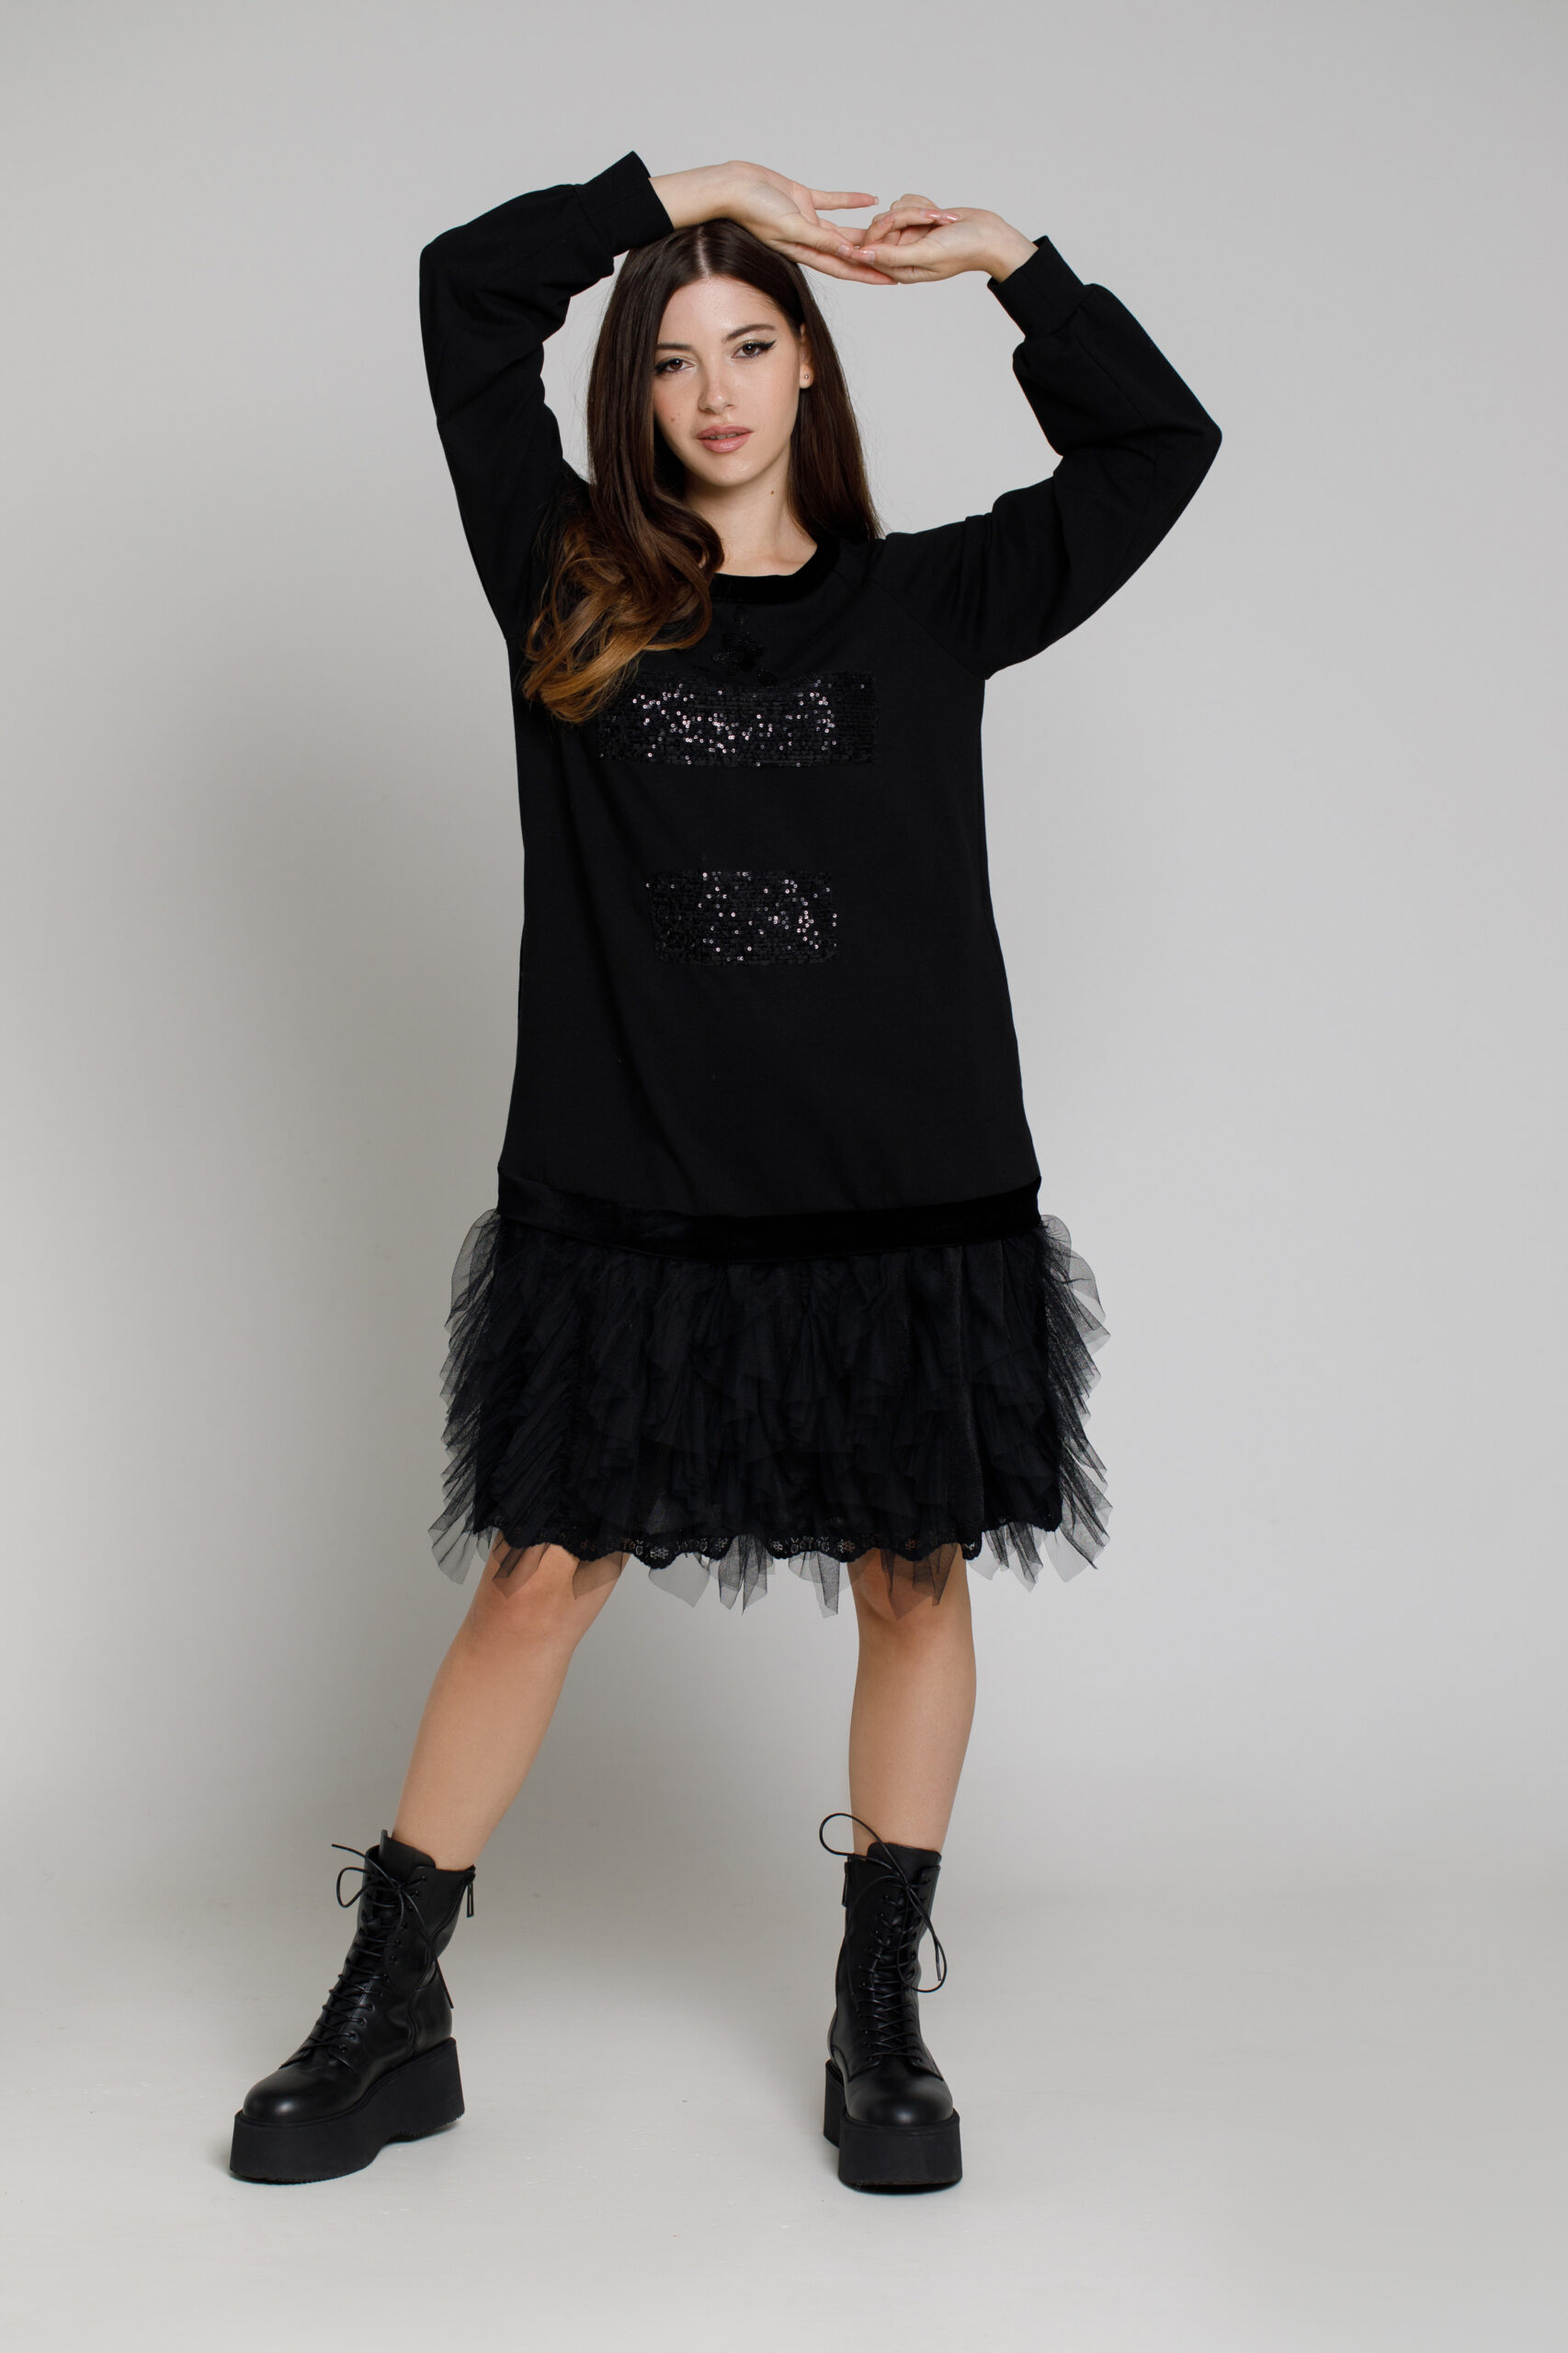 ABINA black velvet dress with tulle ruffles. Natural fabrics, original design, handmade embroidery